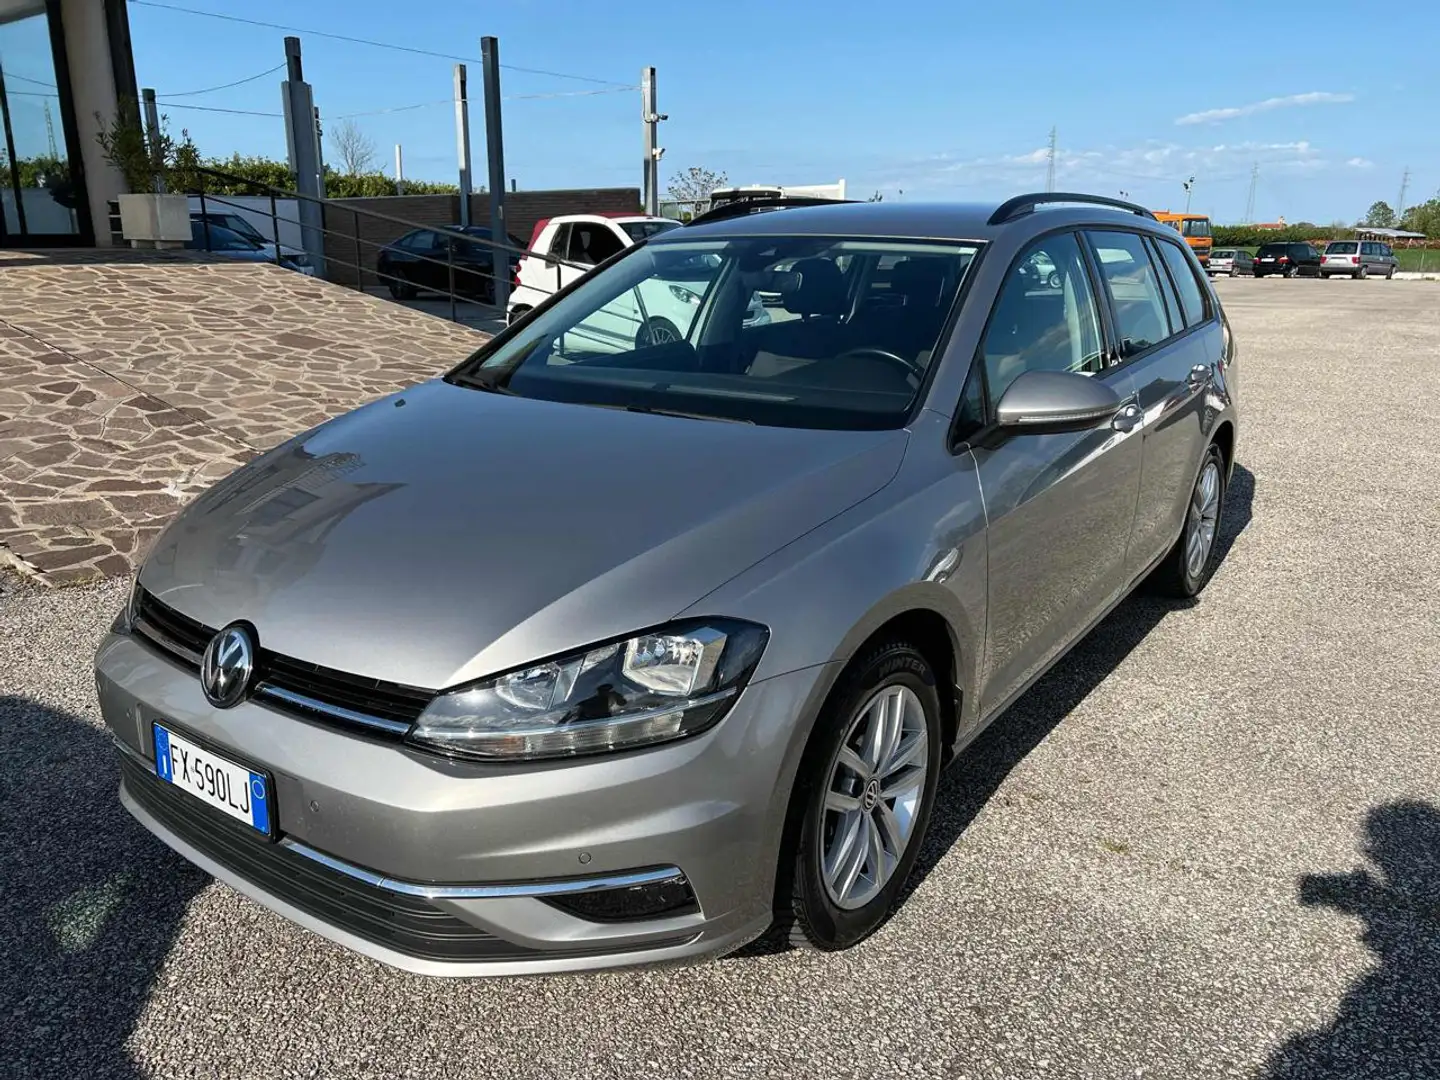 usato Volkswagen Golf Variant Station wagon a Rimini RN per € 15.500,-